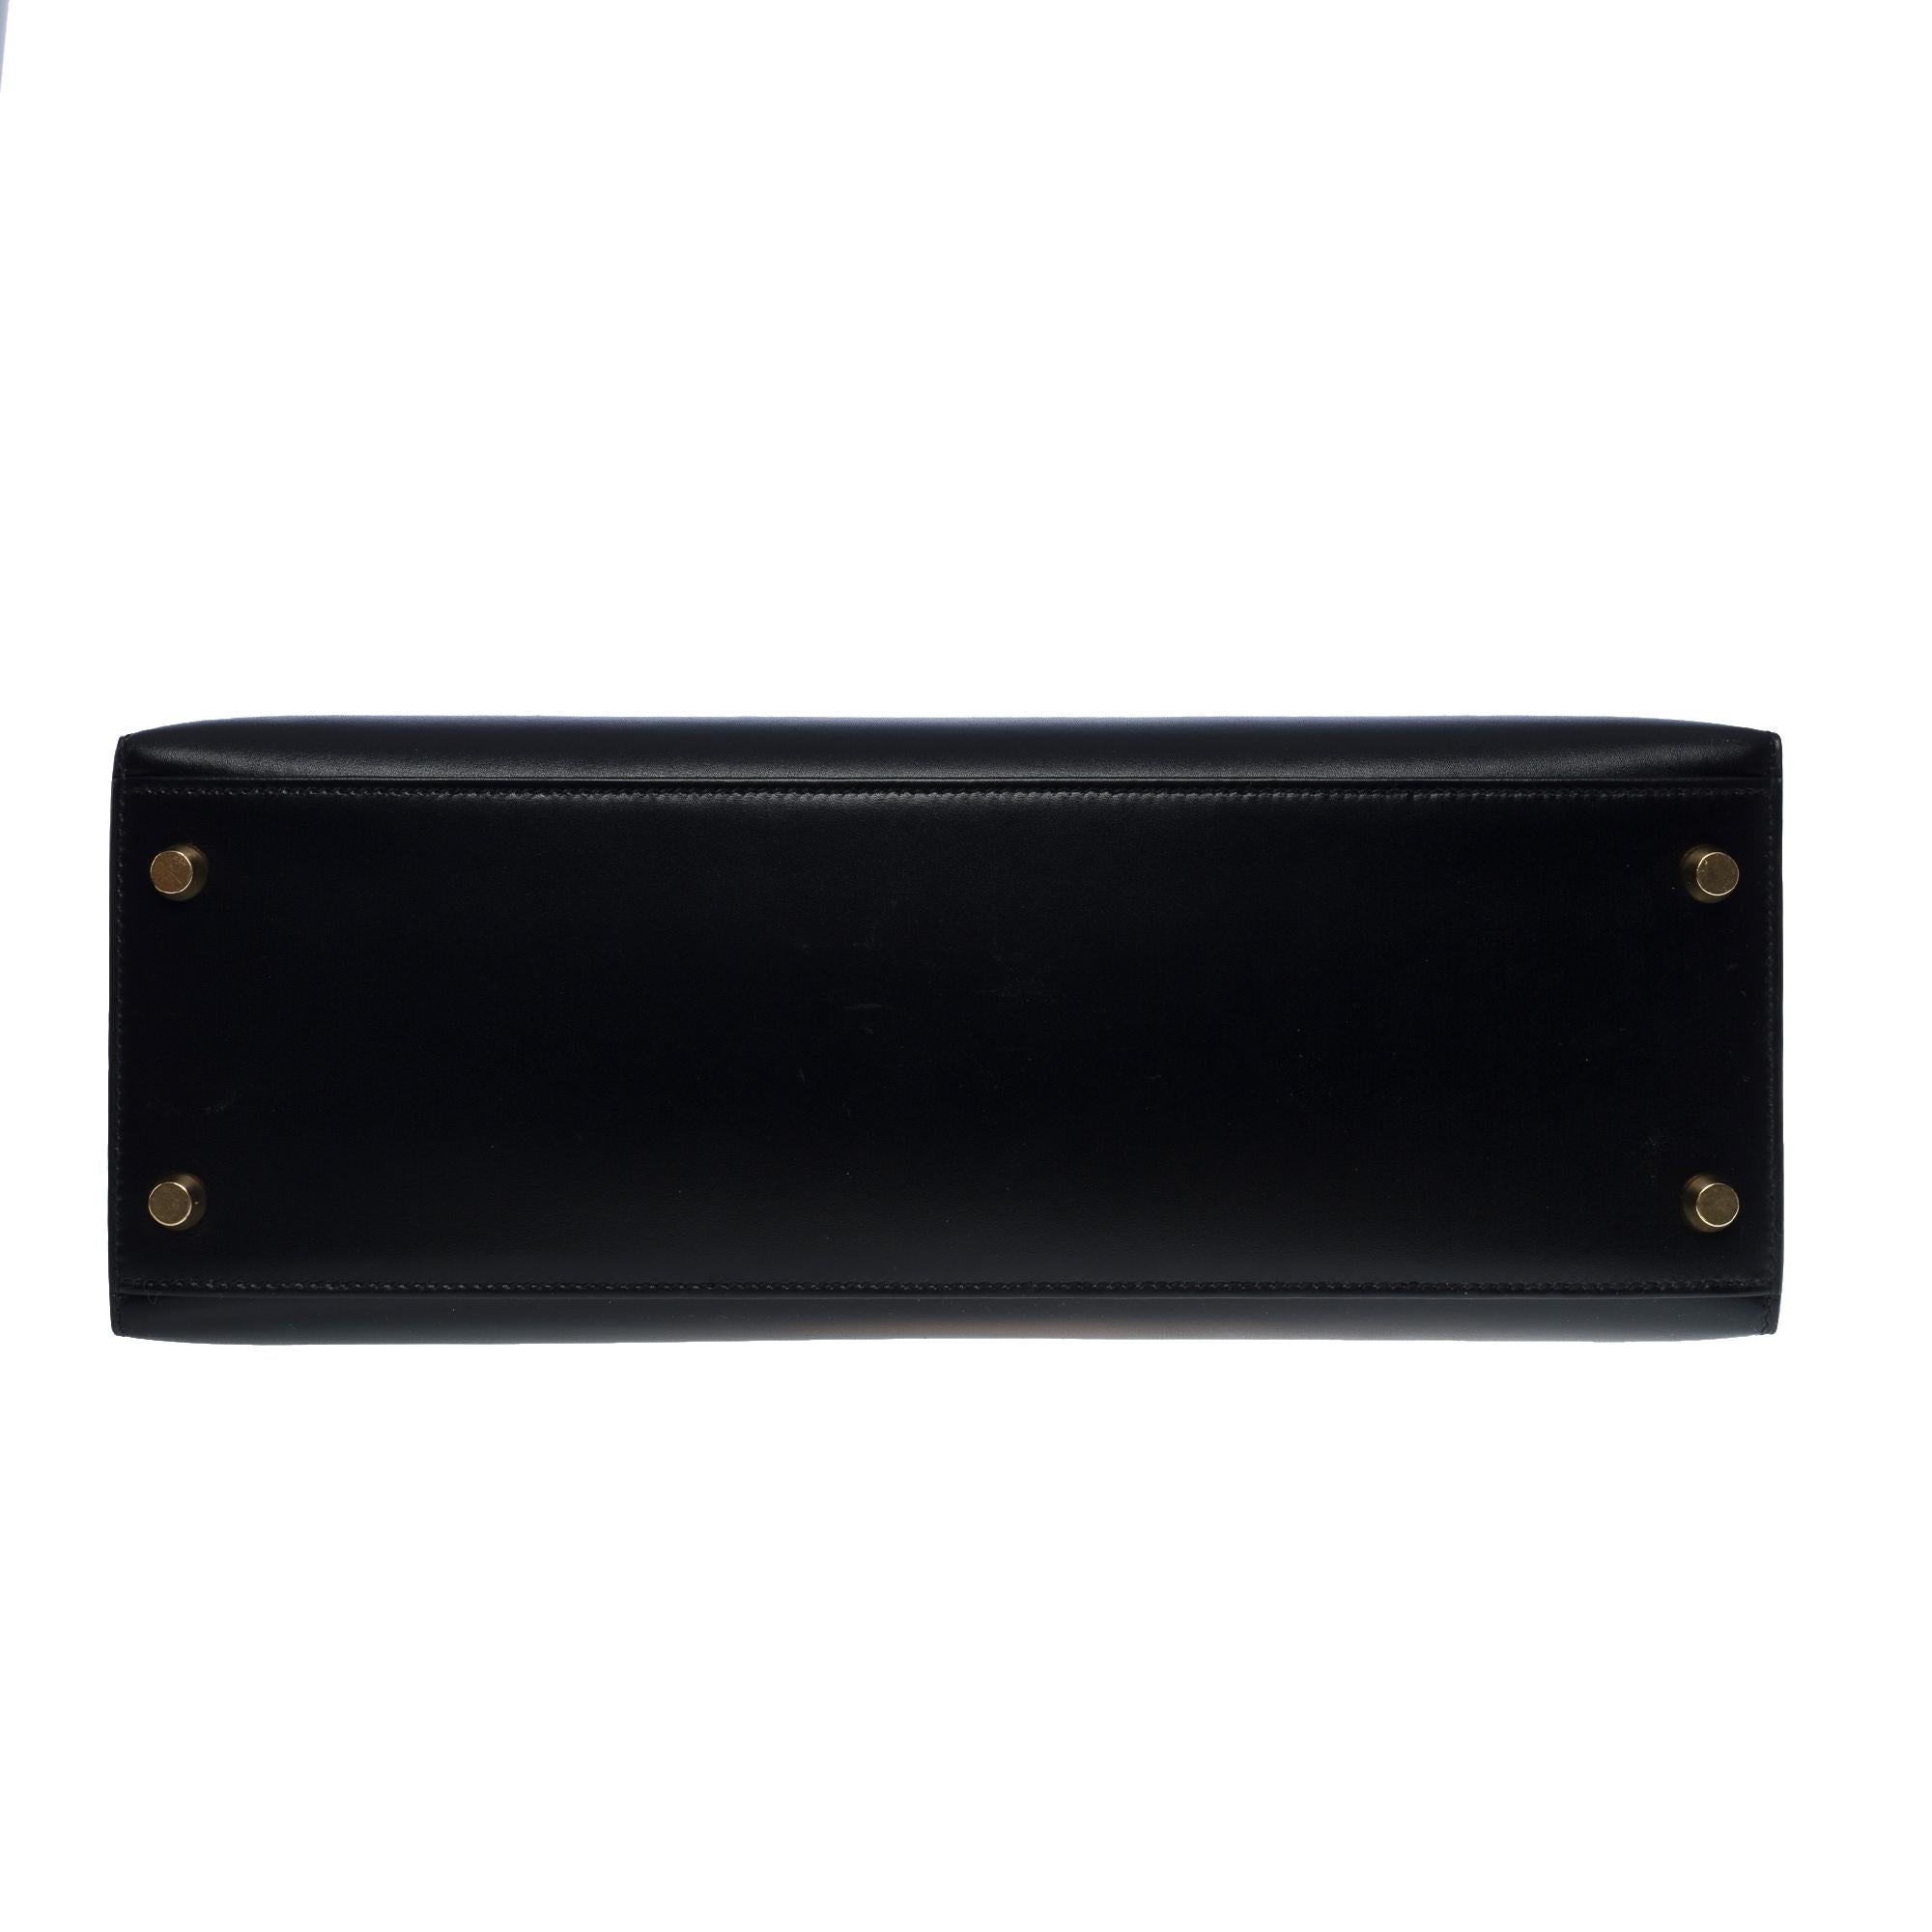 Stunning Hermès Kelly 32 sellier handbag strap in Box calf leather, GHW For Sale 4